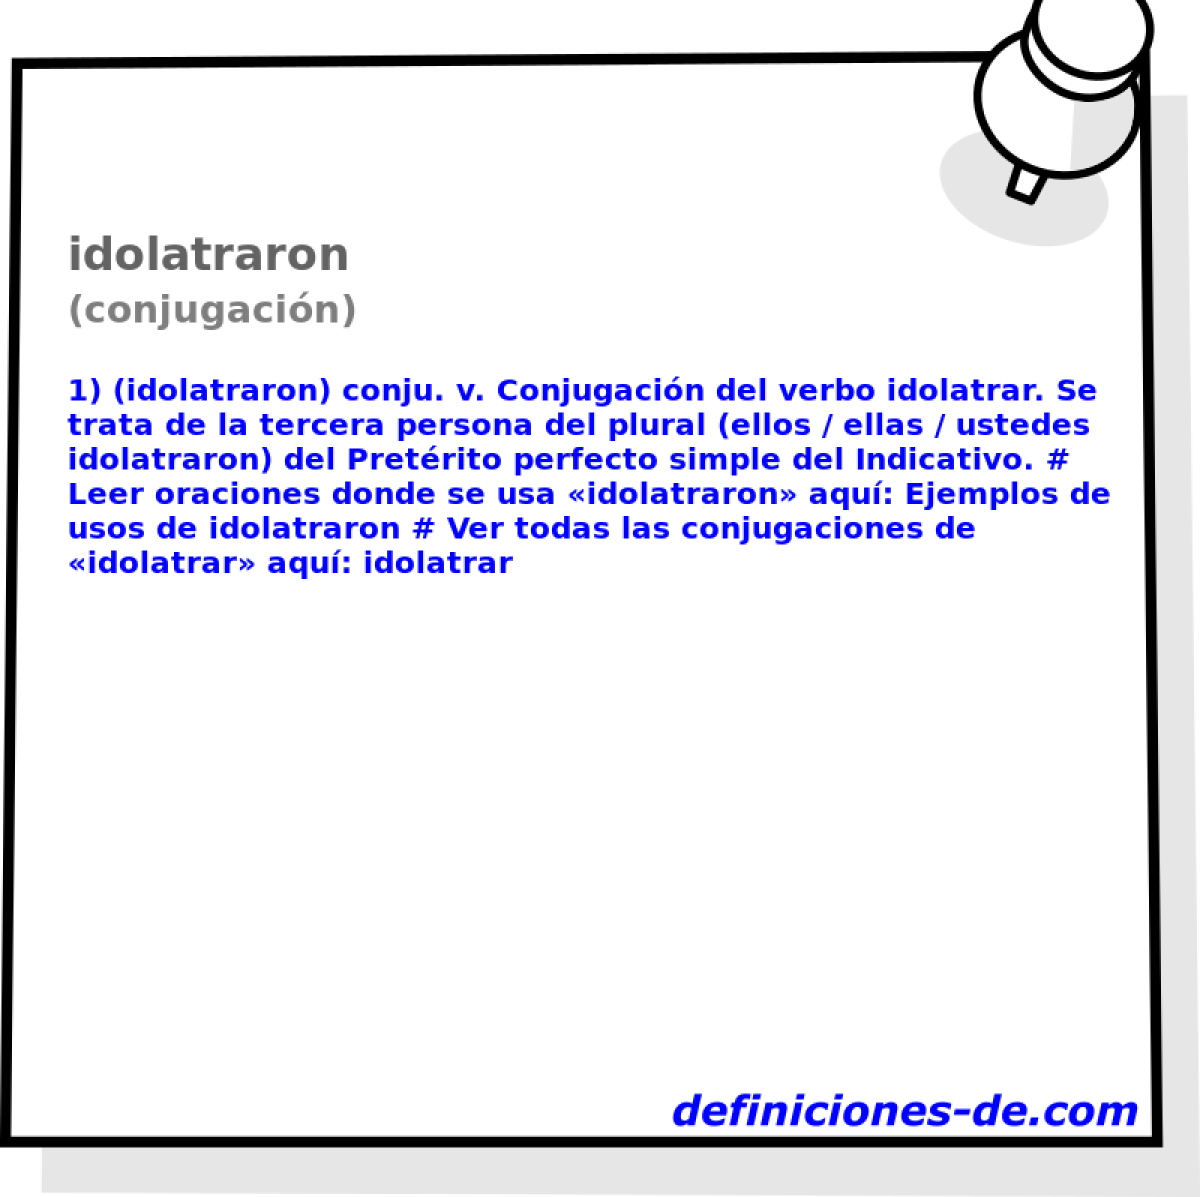 idolatraron (conjugacin)